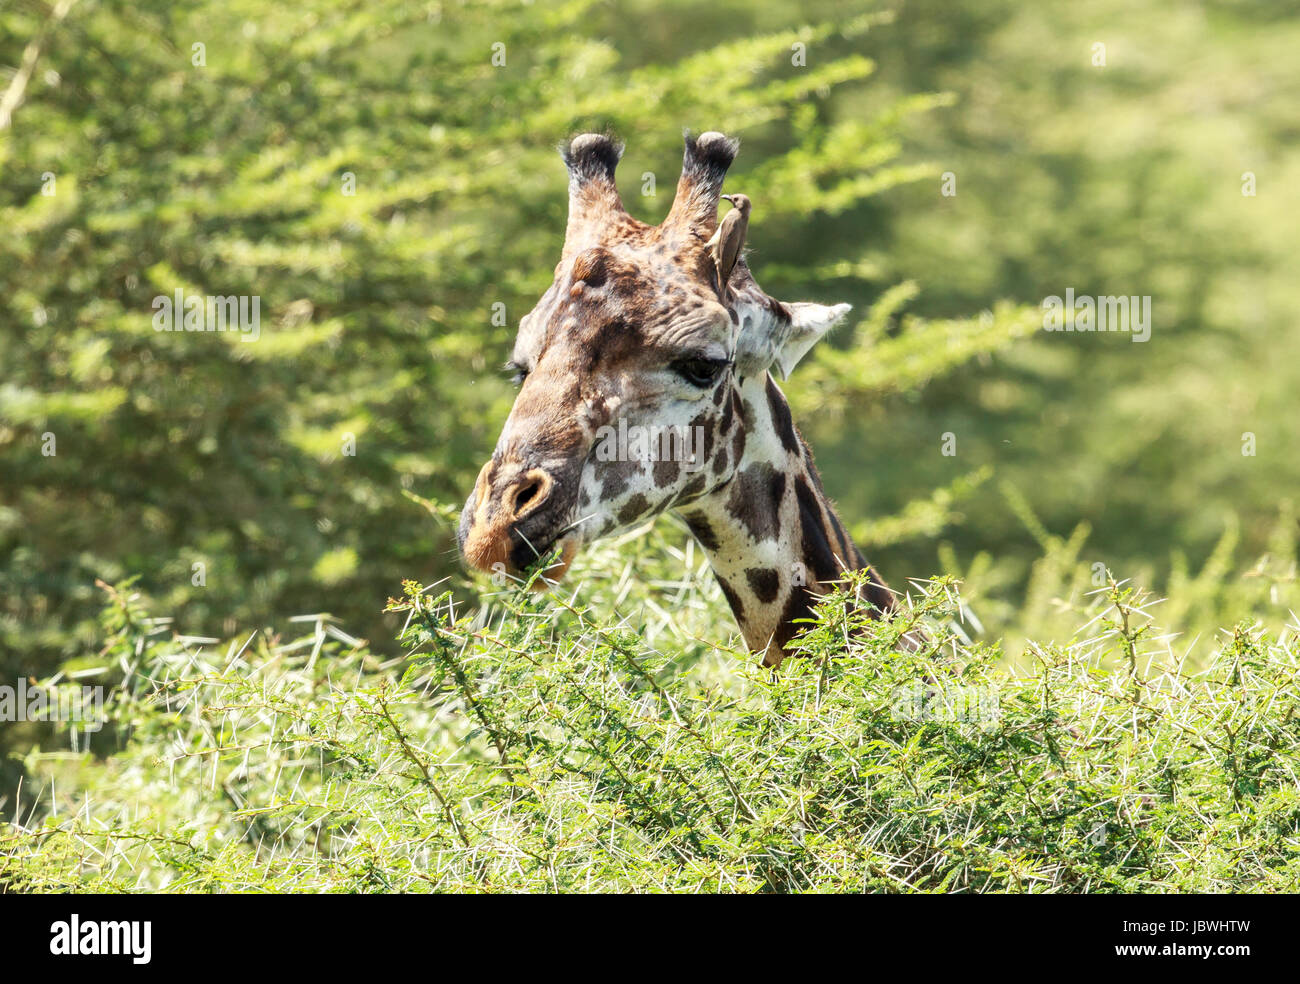 A portrait of a Masai Giraffe Stock Photo